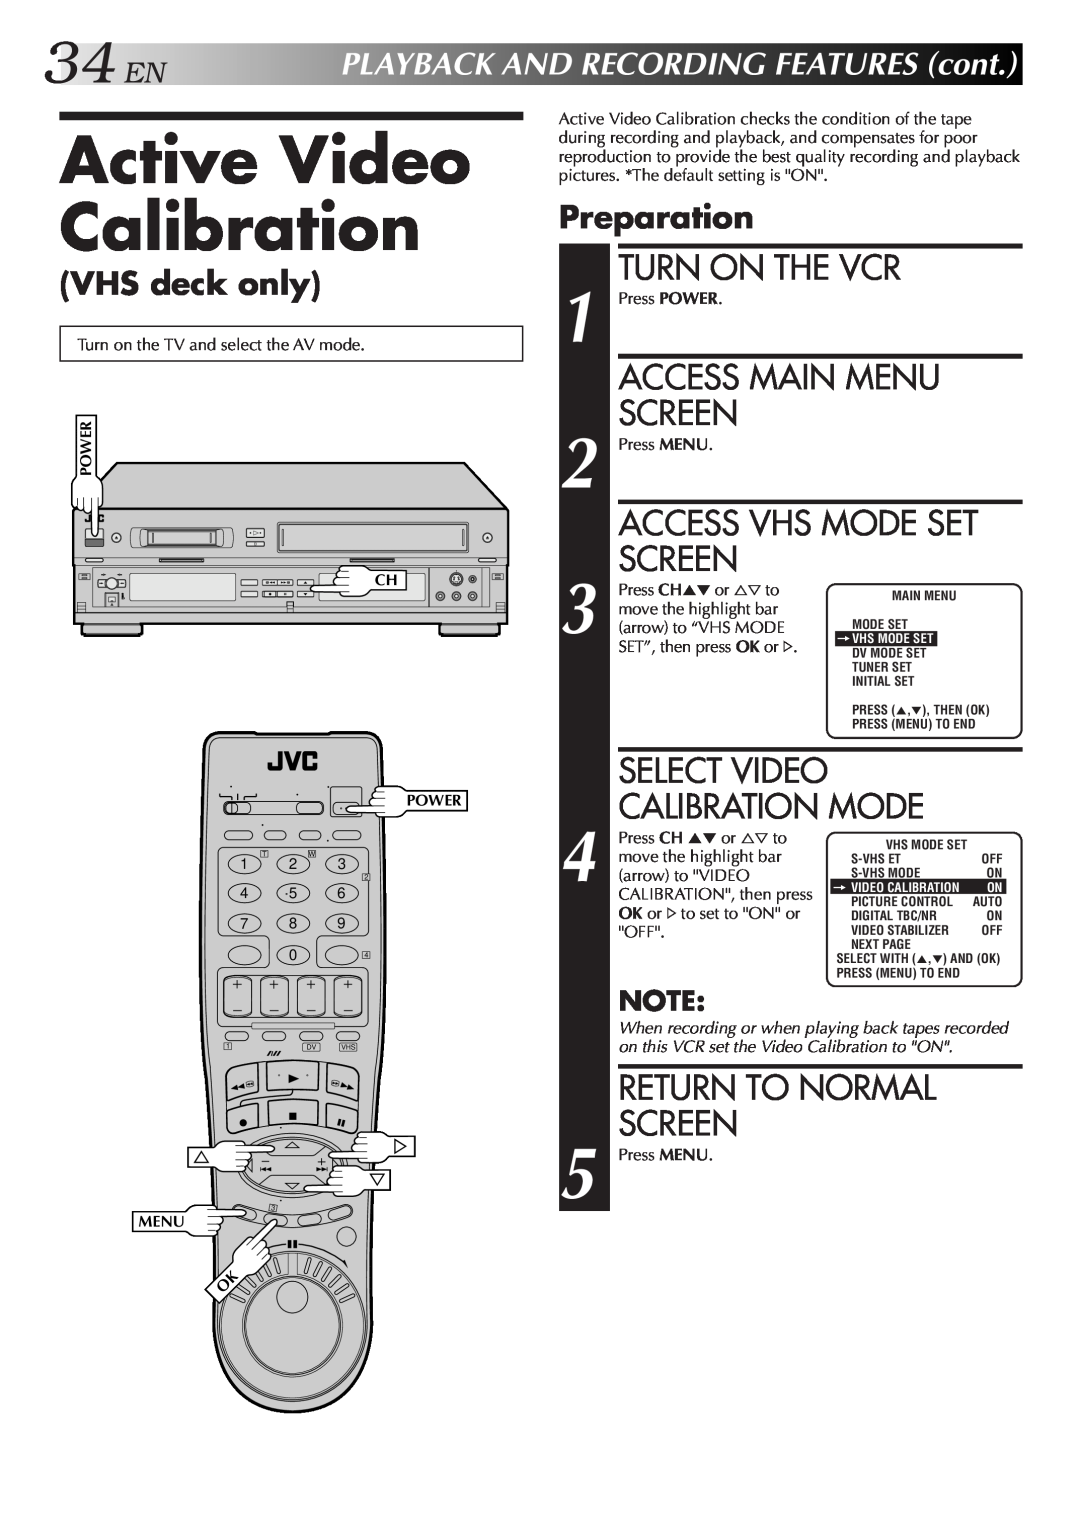 JVC SR-VS10U manual Active Video Calibration, 34EN, Turn On The Vcr, Calibration Mode, VHS deck only, Select Video, Screen 